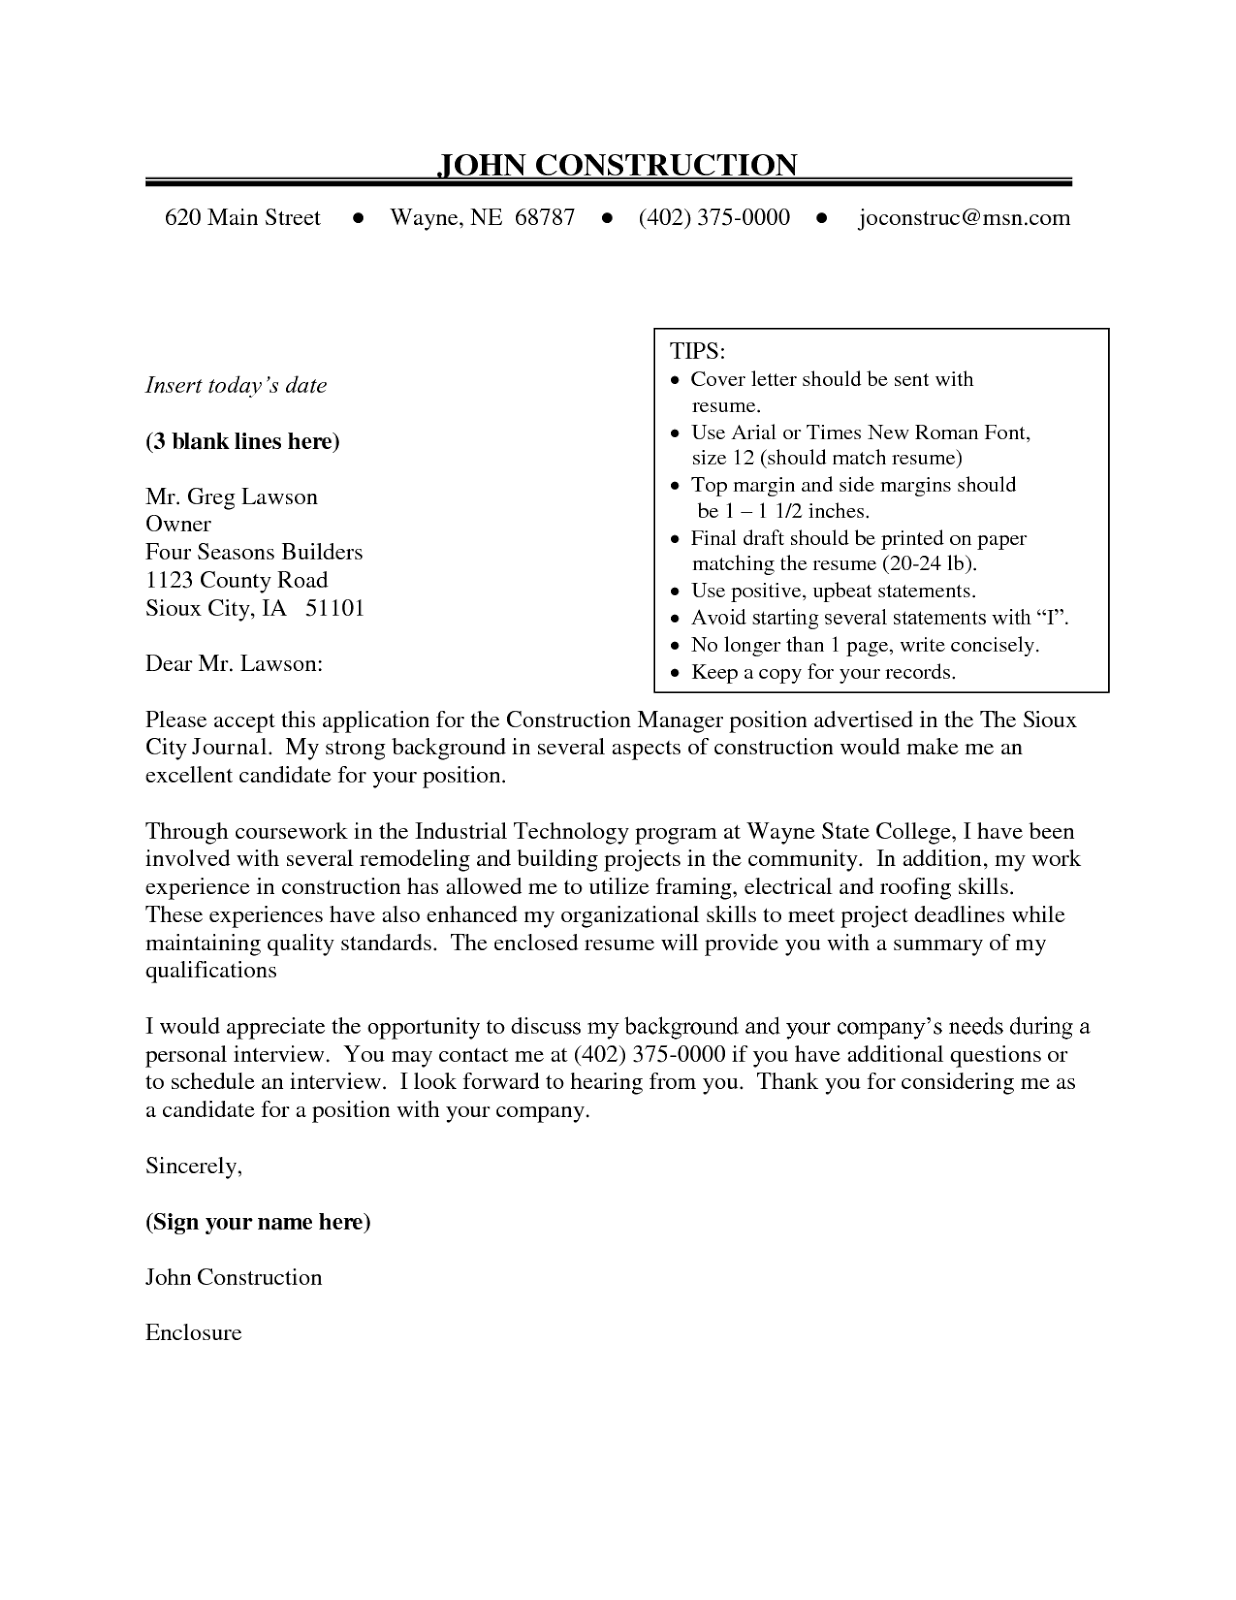 Format for cover letter for job application pdf